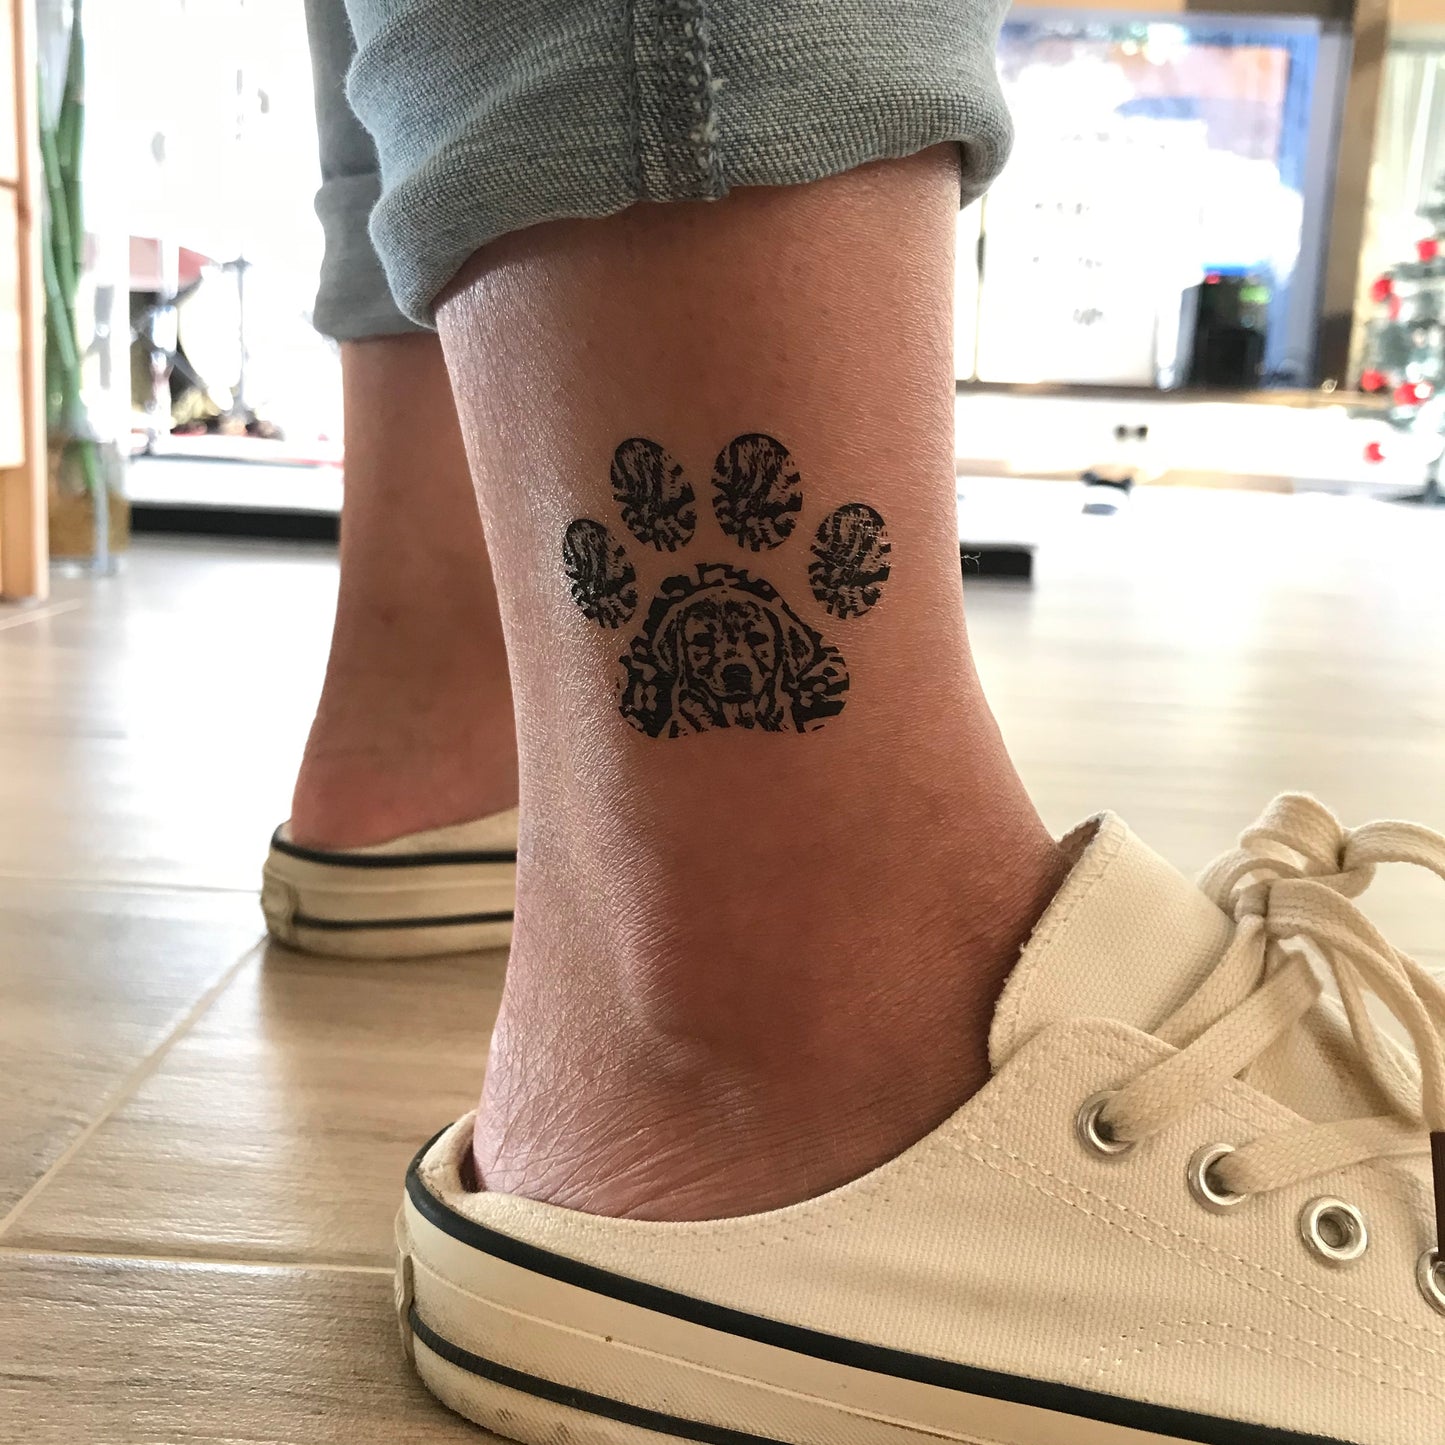 OhMyTat - fake small custom dog pet temporary tattoo sticker paw effect style design idea on ankle leg